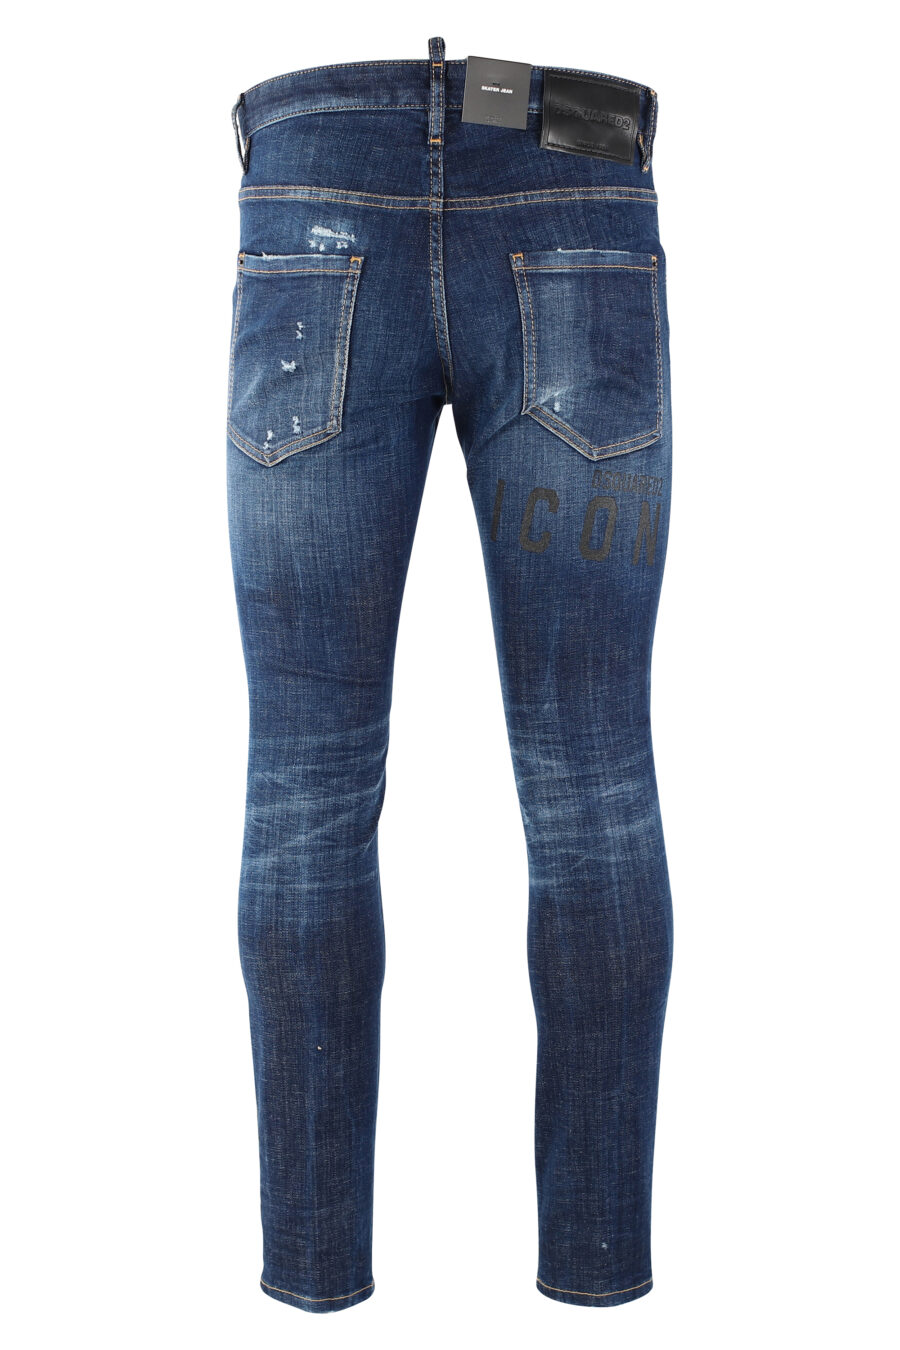 Jeanshose "icon skater jean" dunkelblau semi-getragen - IMG 9658 1